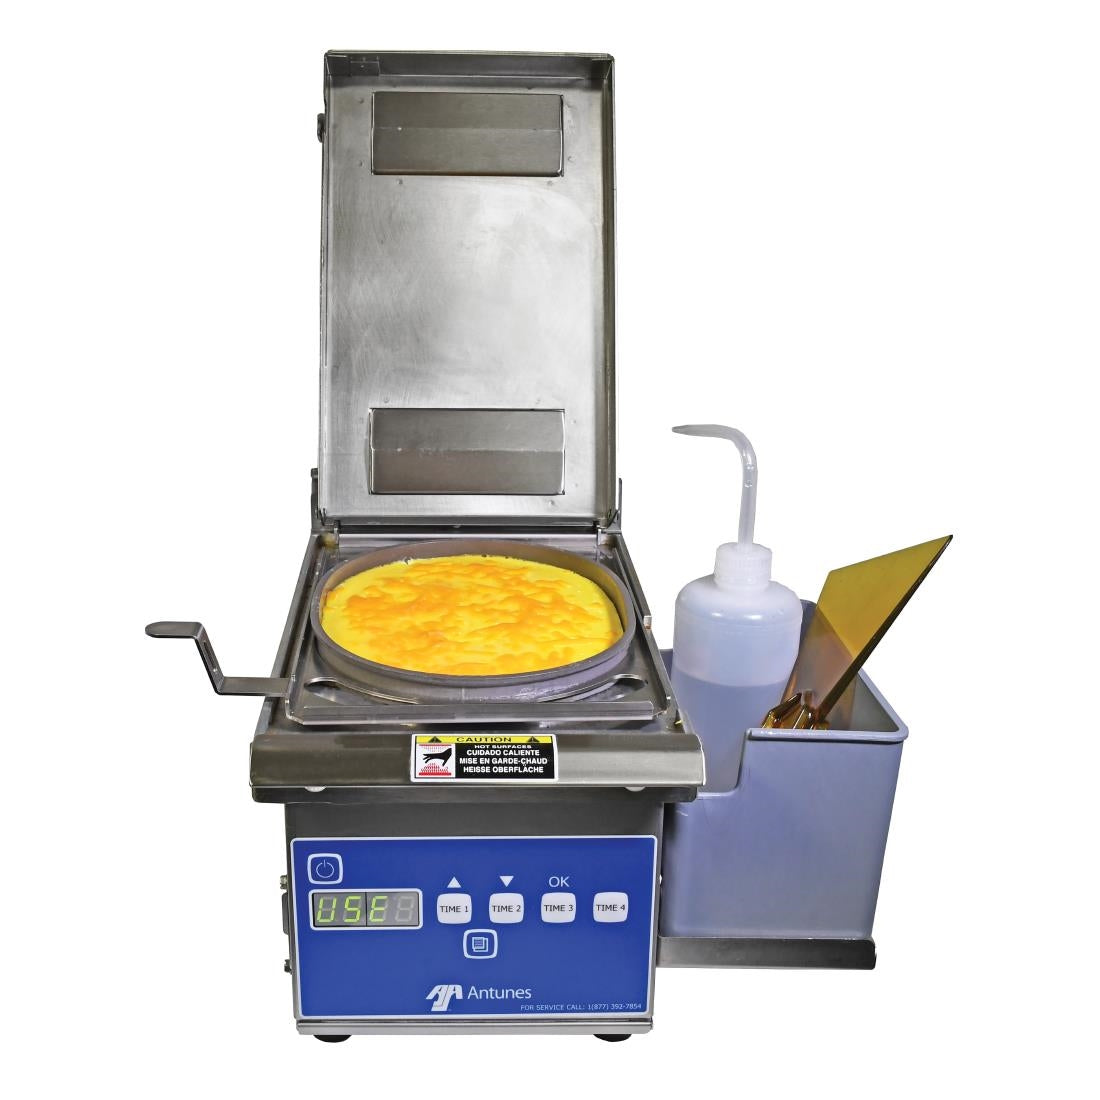 CJ853 Antunes Egg Cooker ESM-600 JD Catering Equipment Solutions Ltd